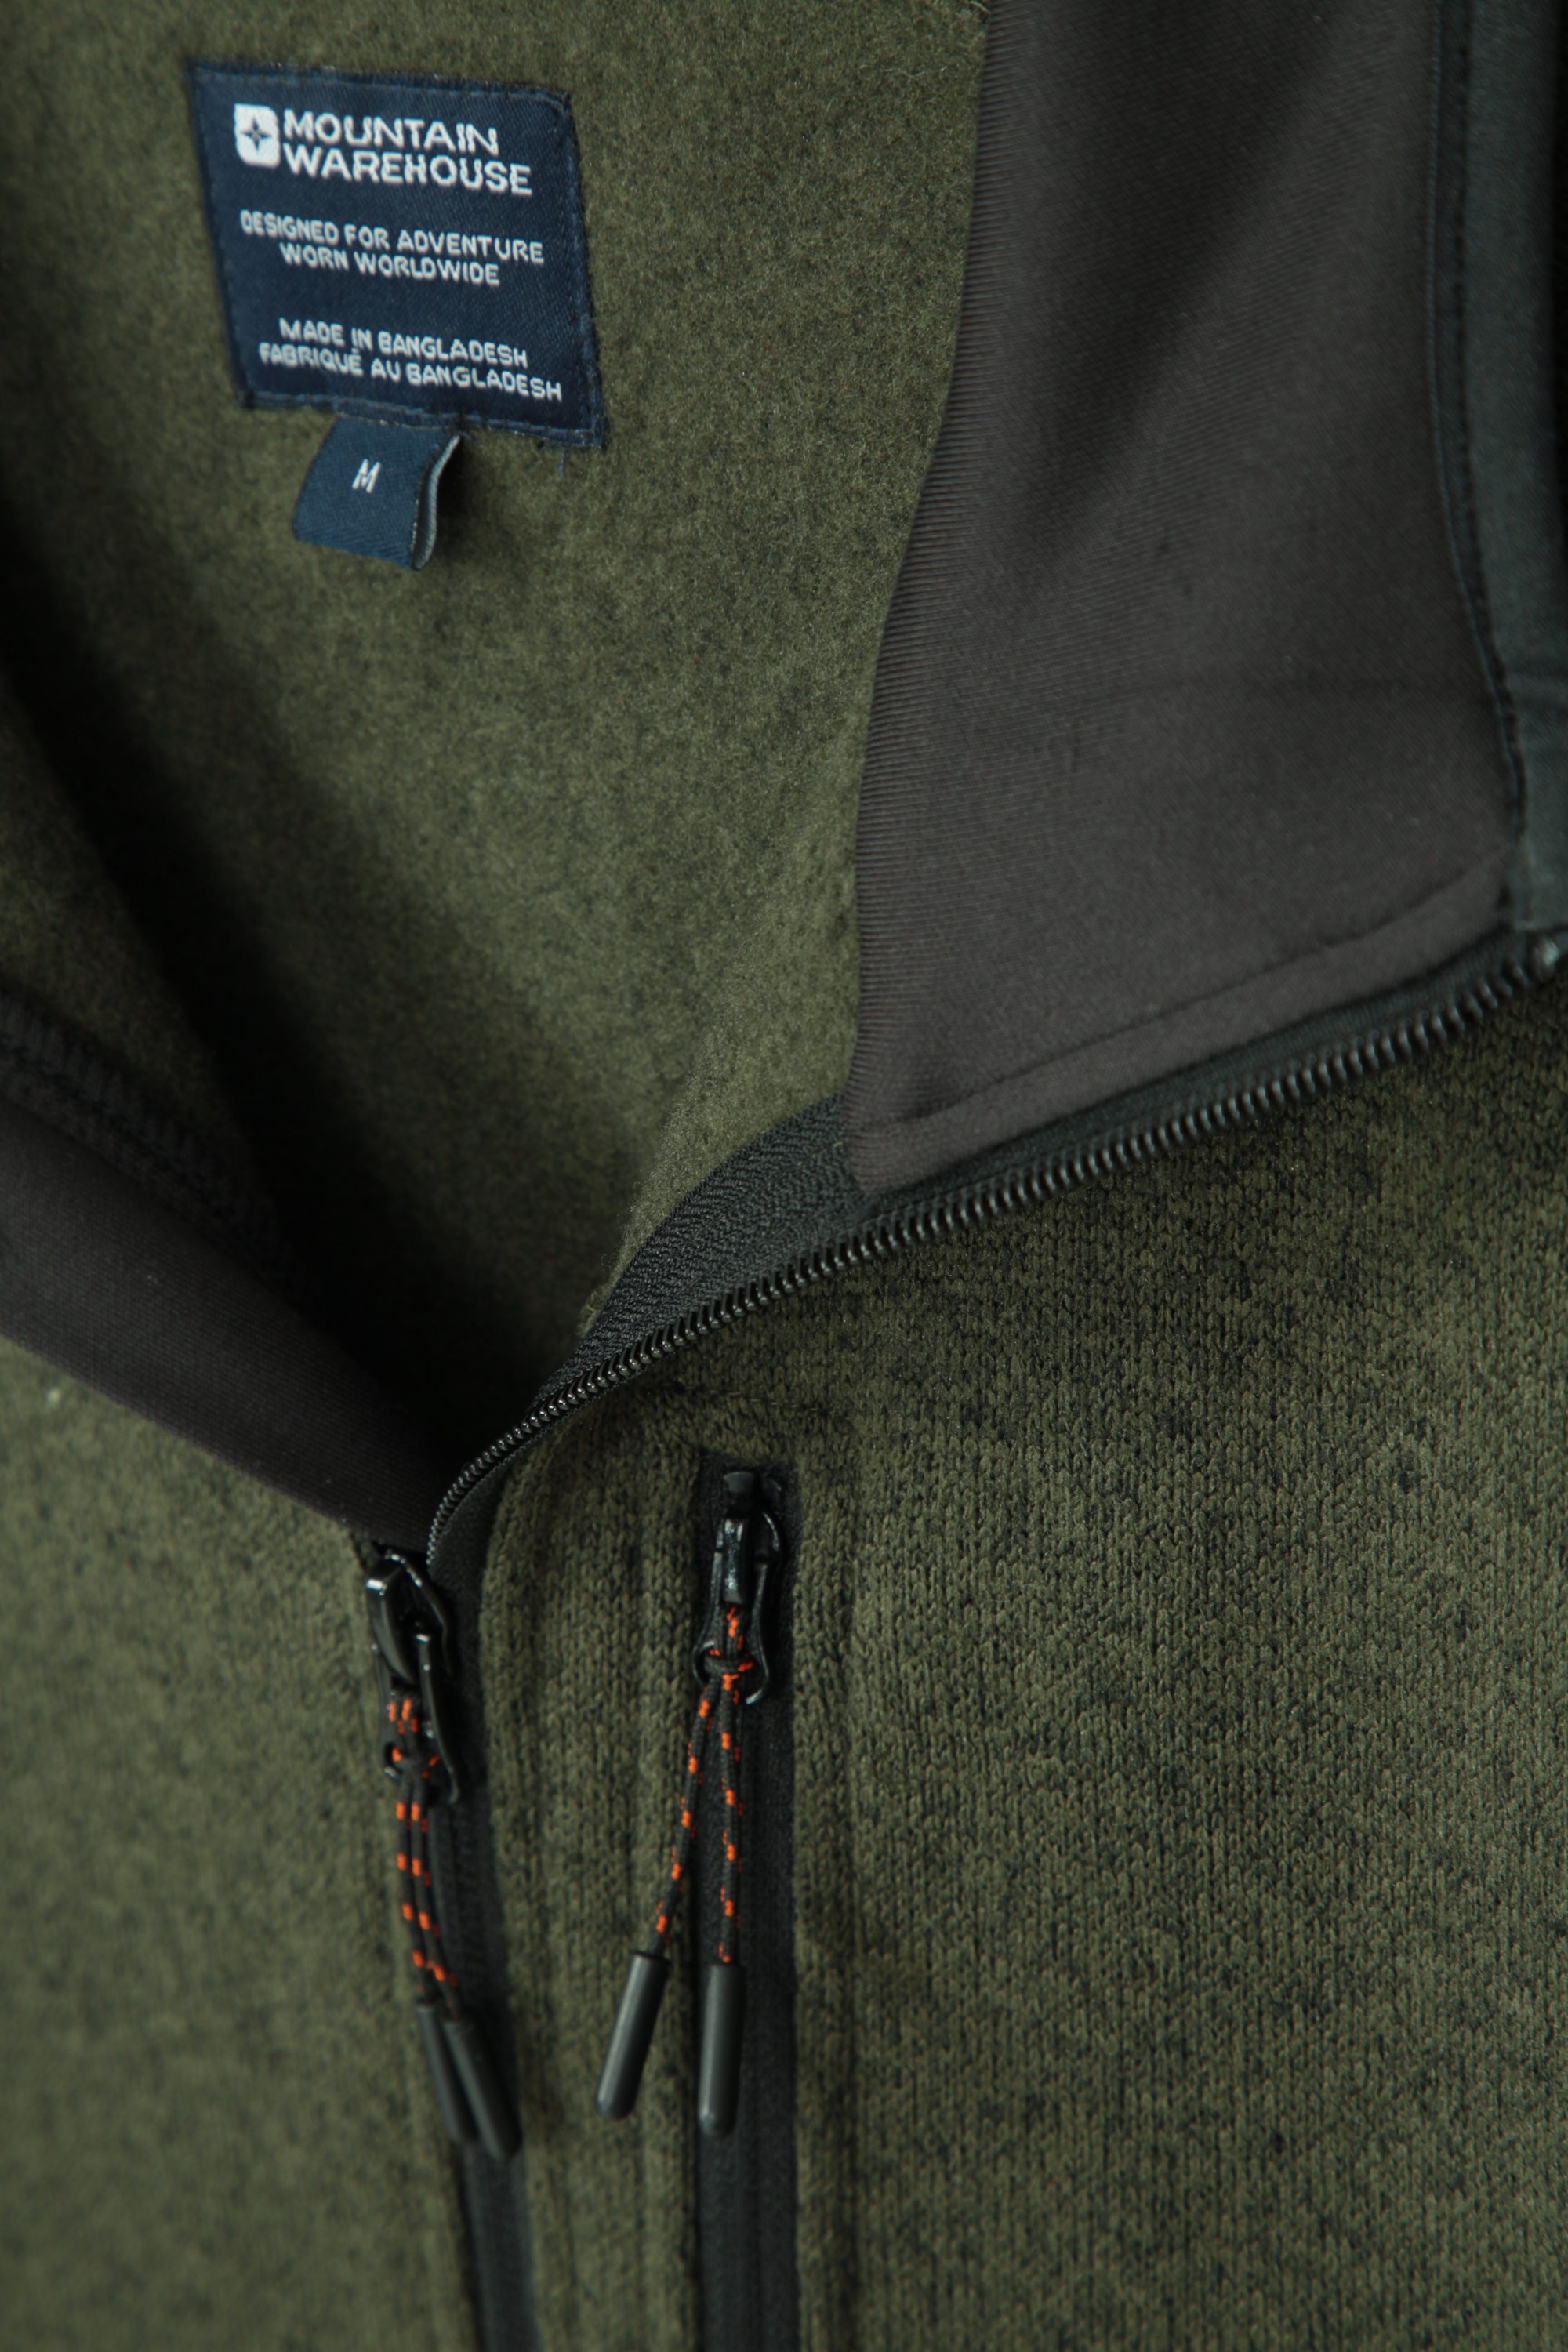 Treston Mens Full-Zip Fleece Jacket